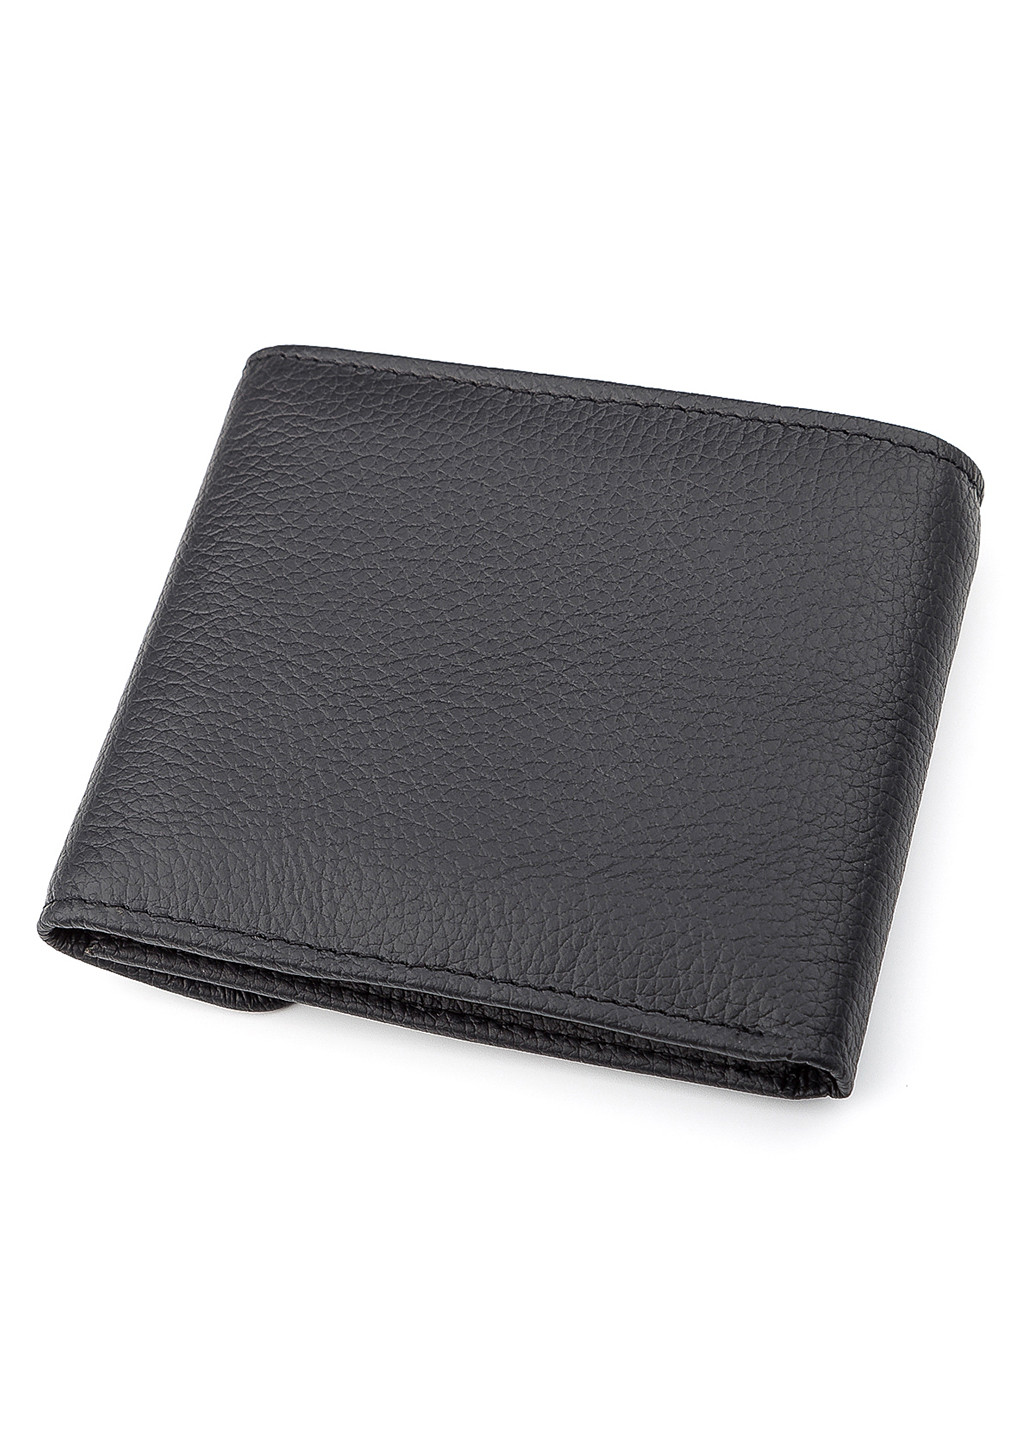 Мужской кожаный кошелек 11х9,5х2,5 см st leather (229458645)